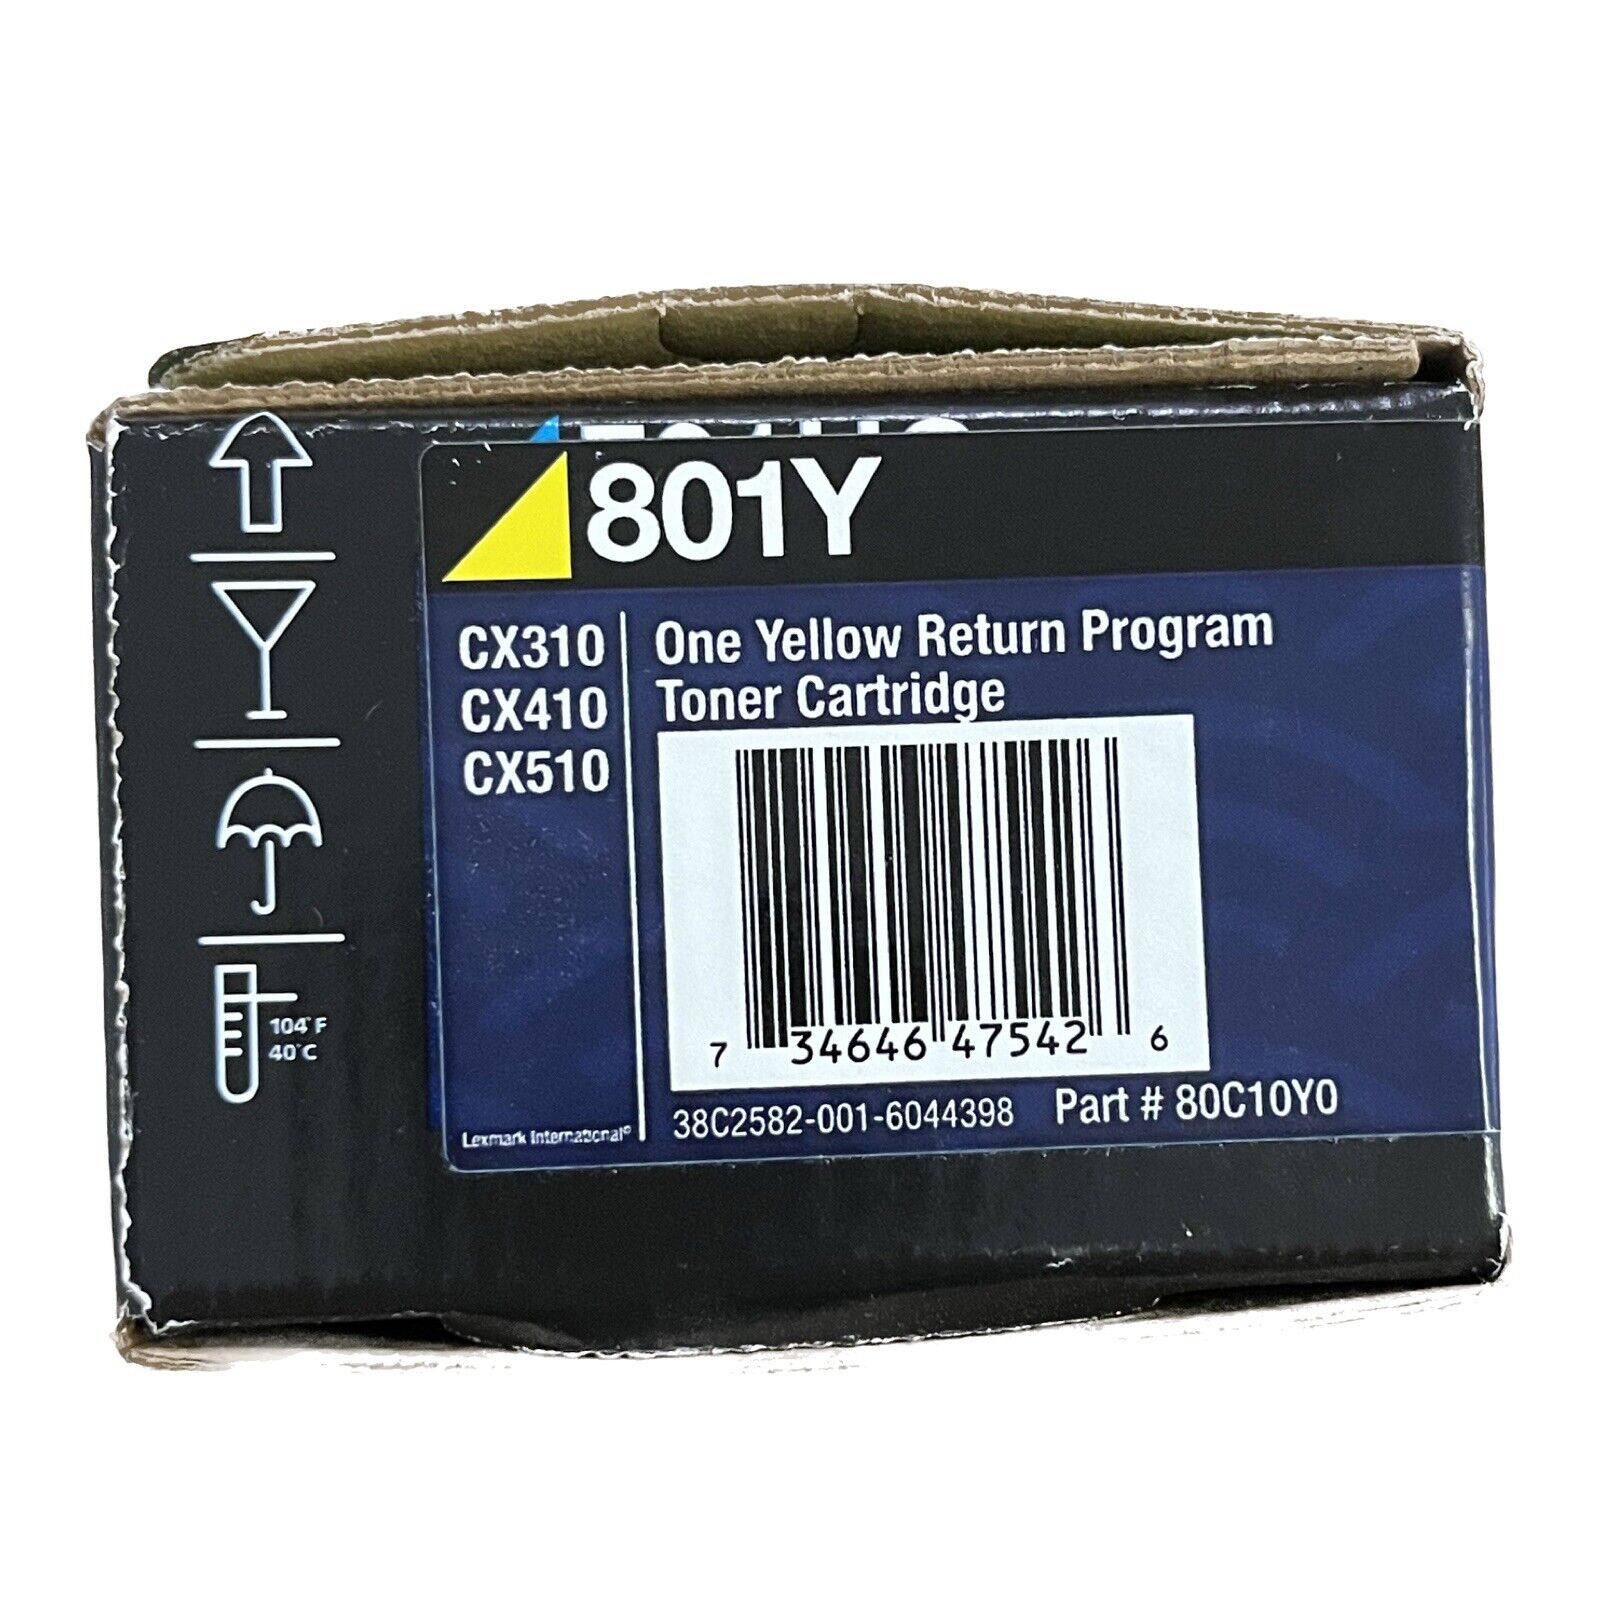 Genuine Lexmark 801Y One Yellow Return Program Toner Cartridge mNew